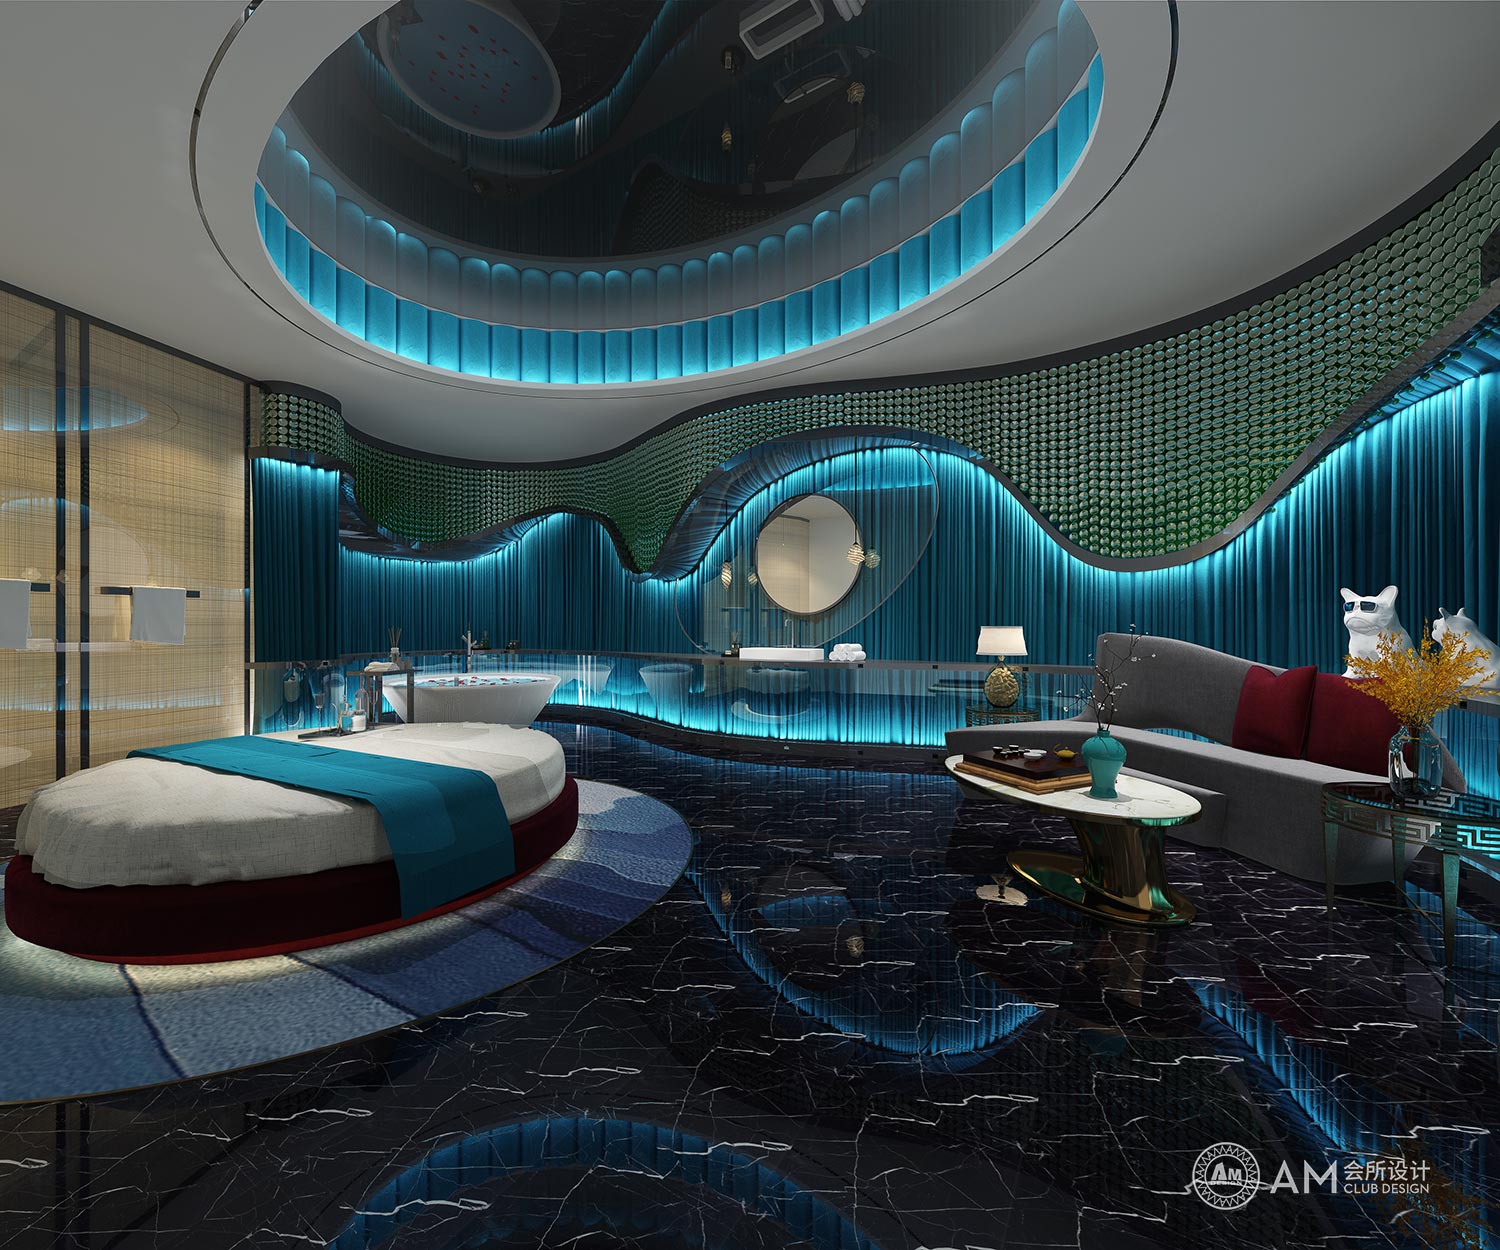 AM DESIGN | Spa room design of Tianjun No.7 Top Spa Club